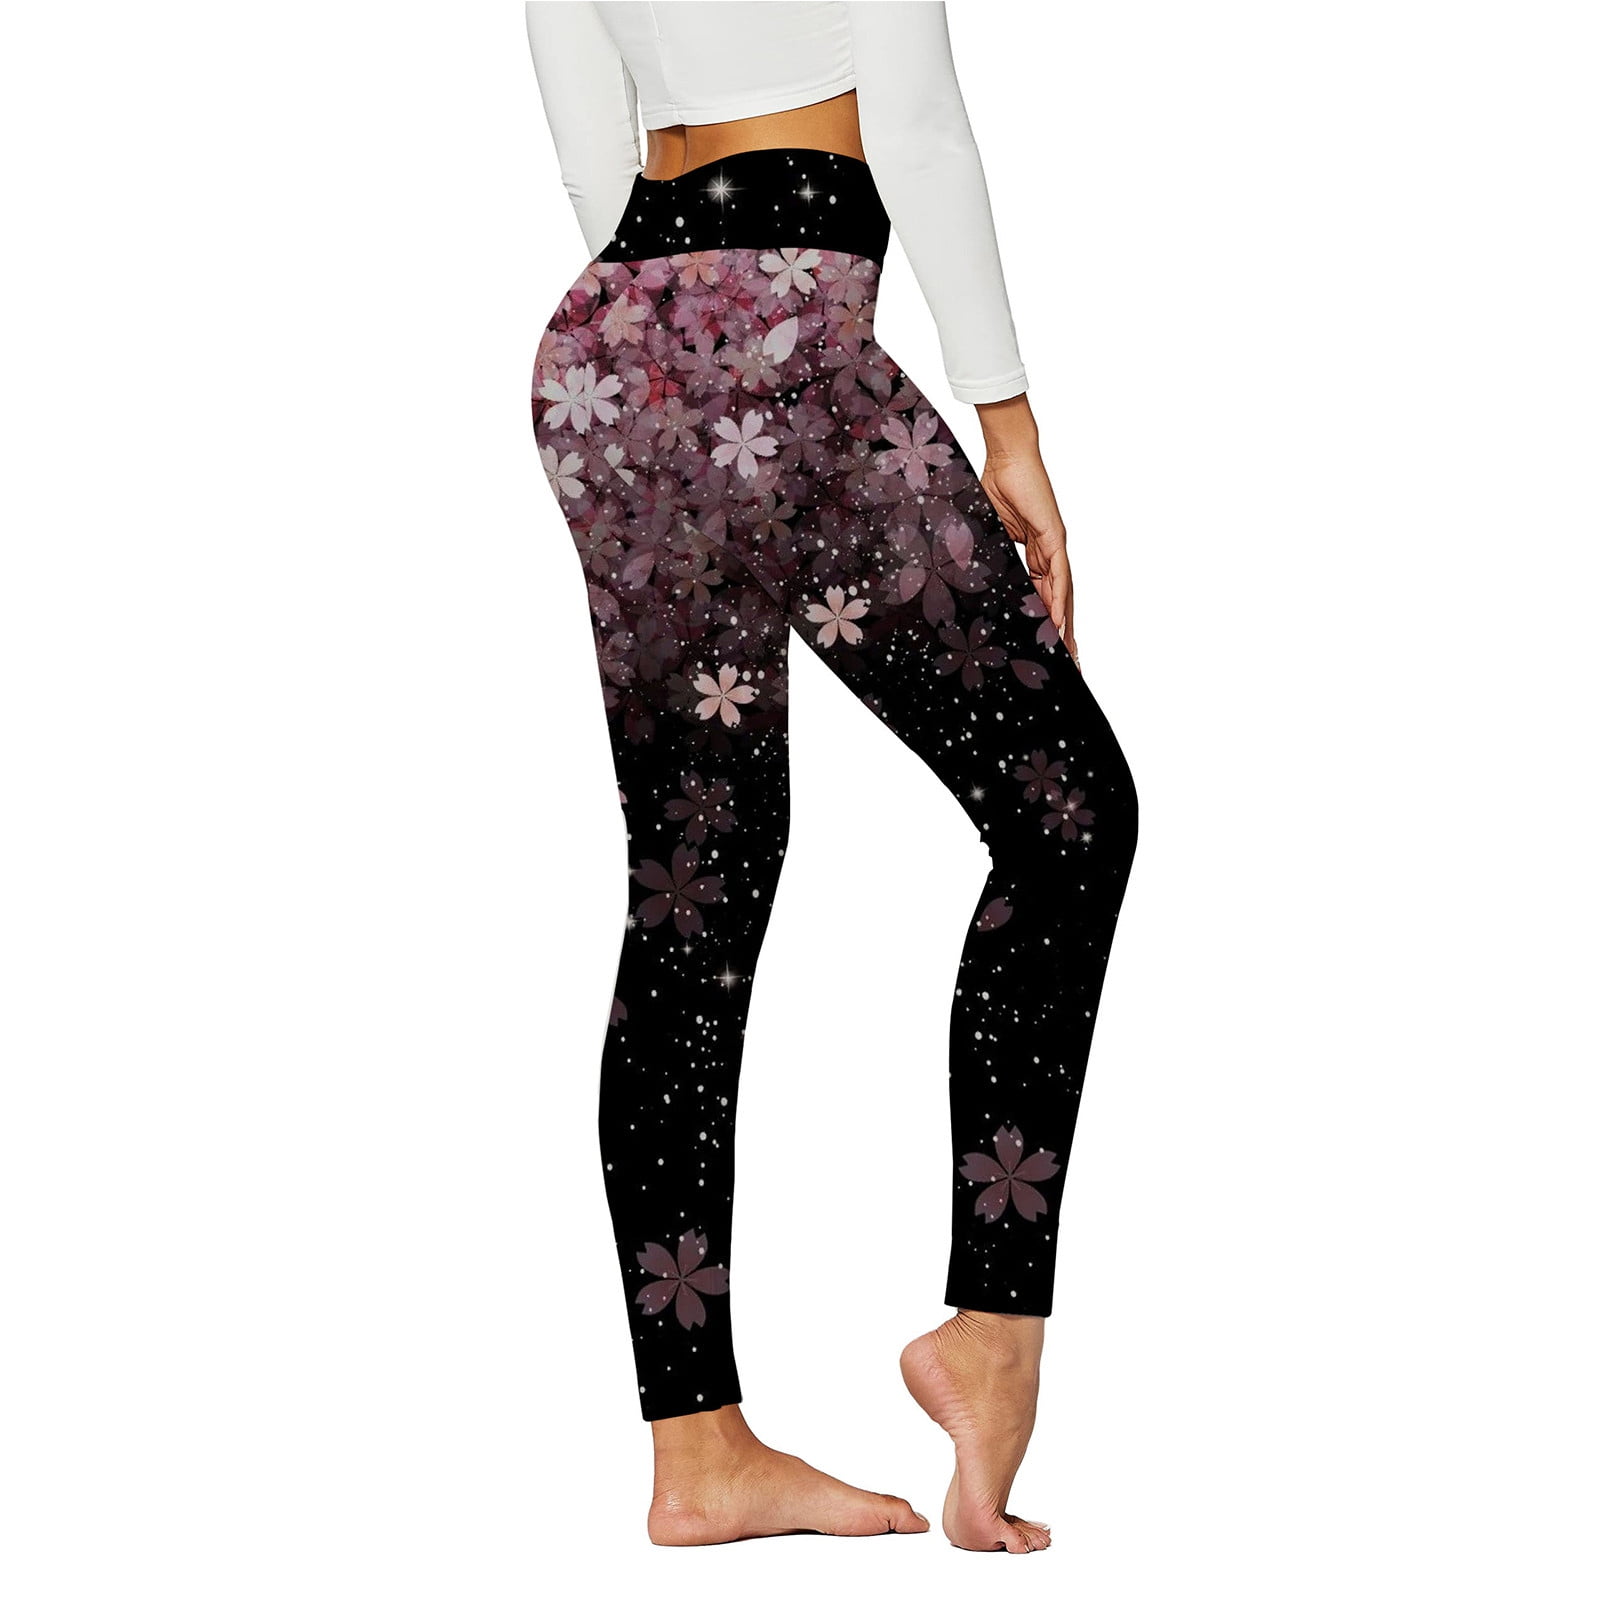 ZHAGHMIN Baggy Sweatpants Ladies' Printed Sports Leggings Yoga